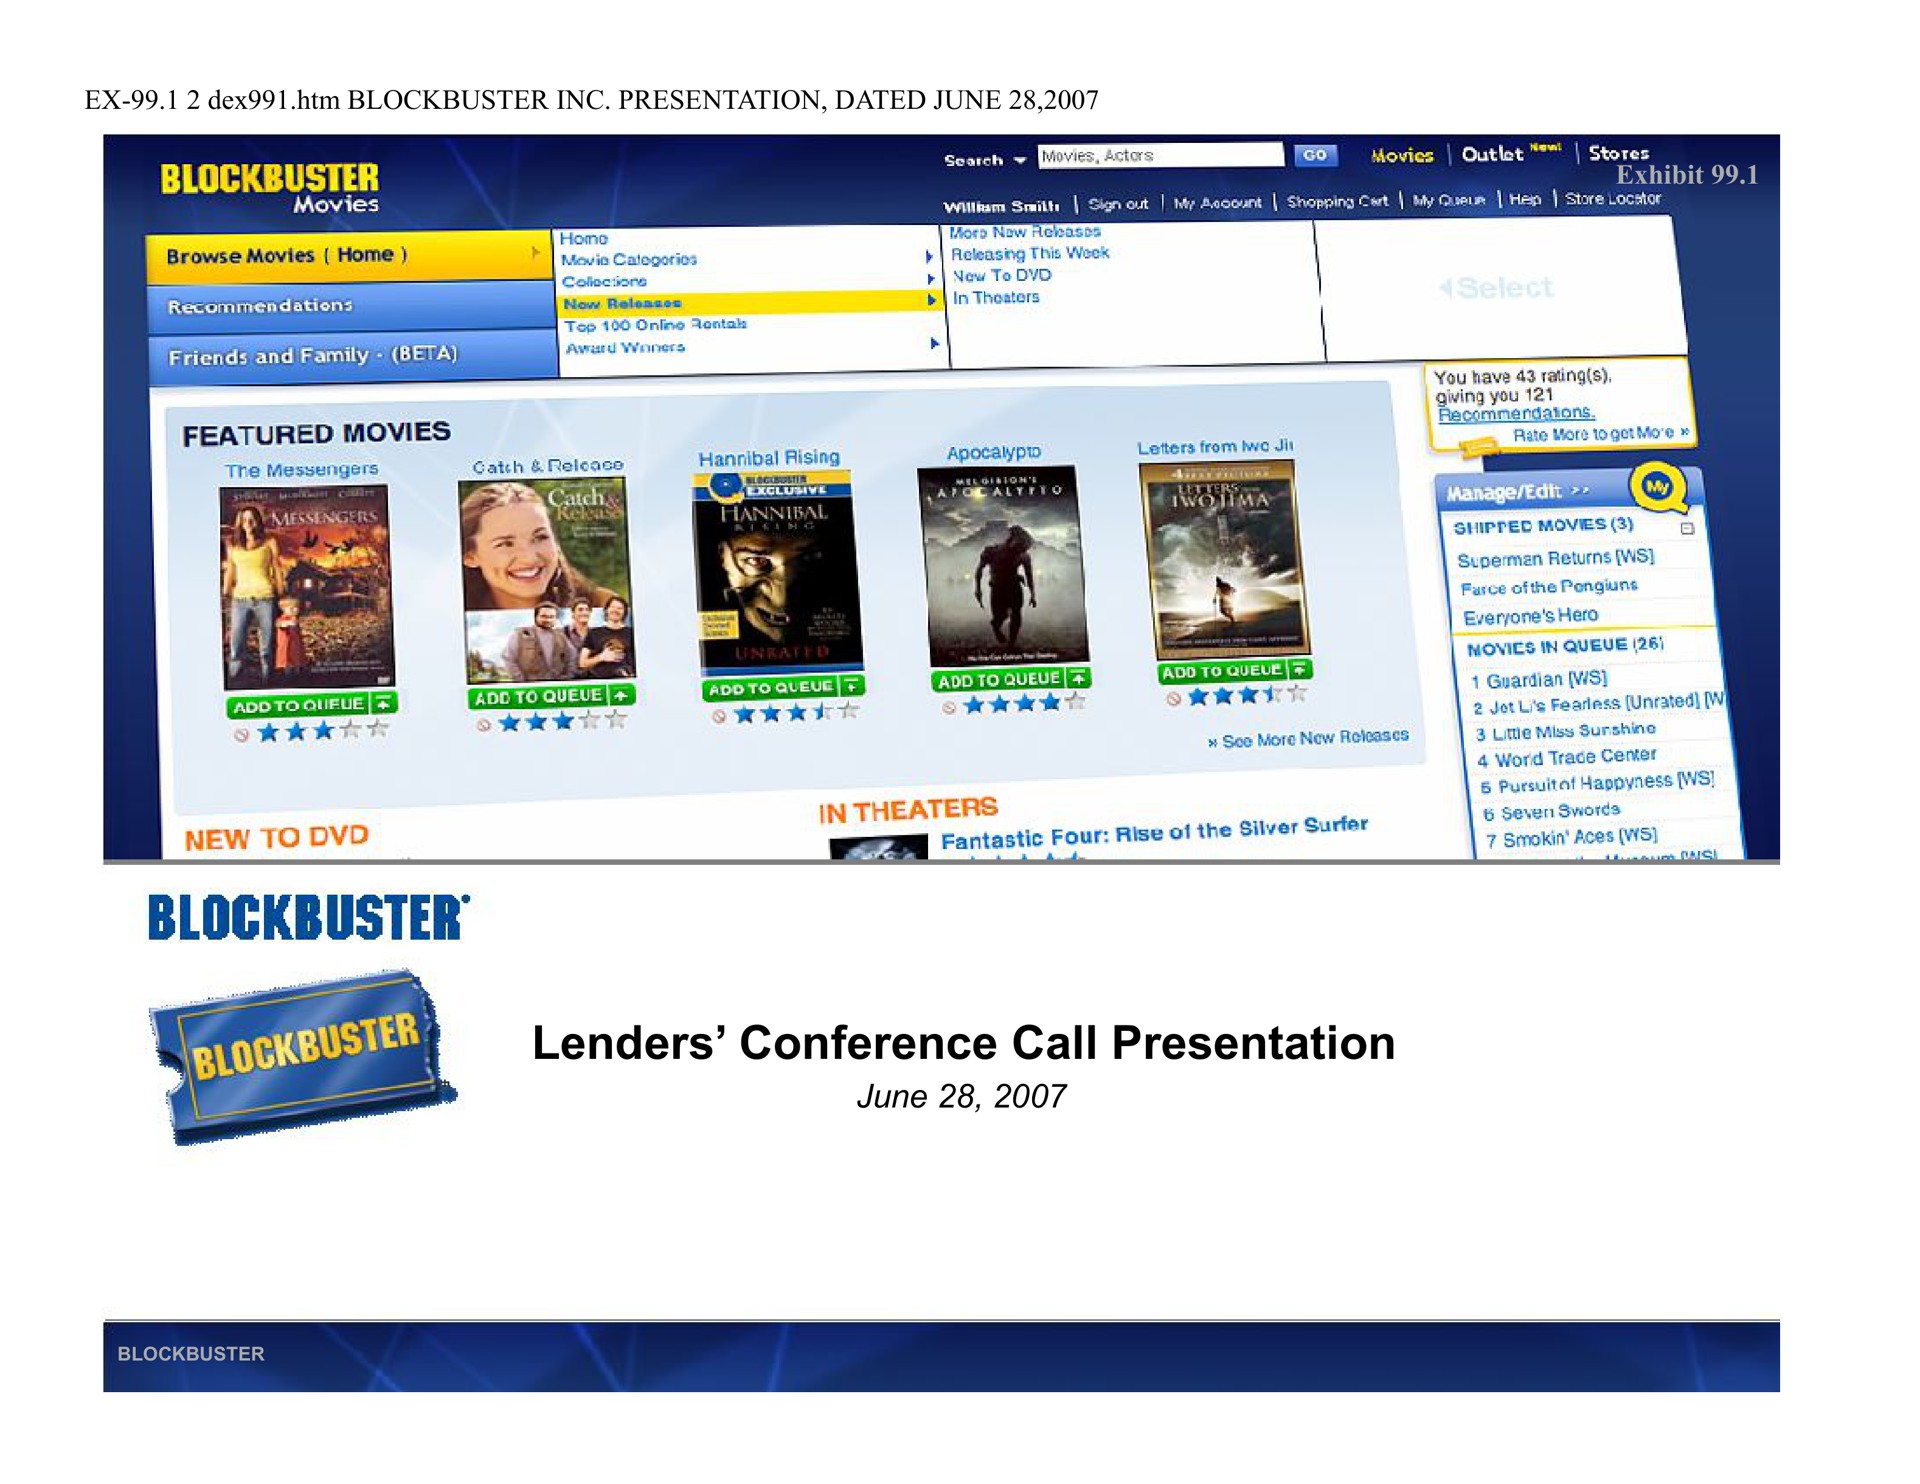 lenders conference call presentation blockbuster | Blockbuster Video